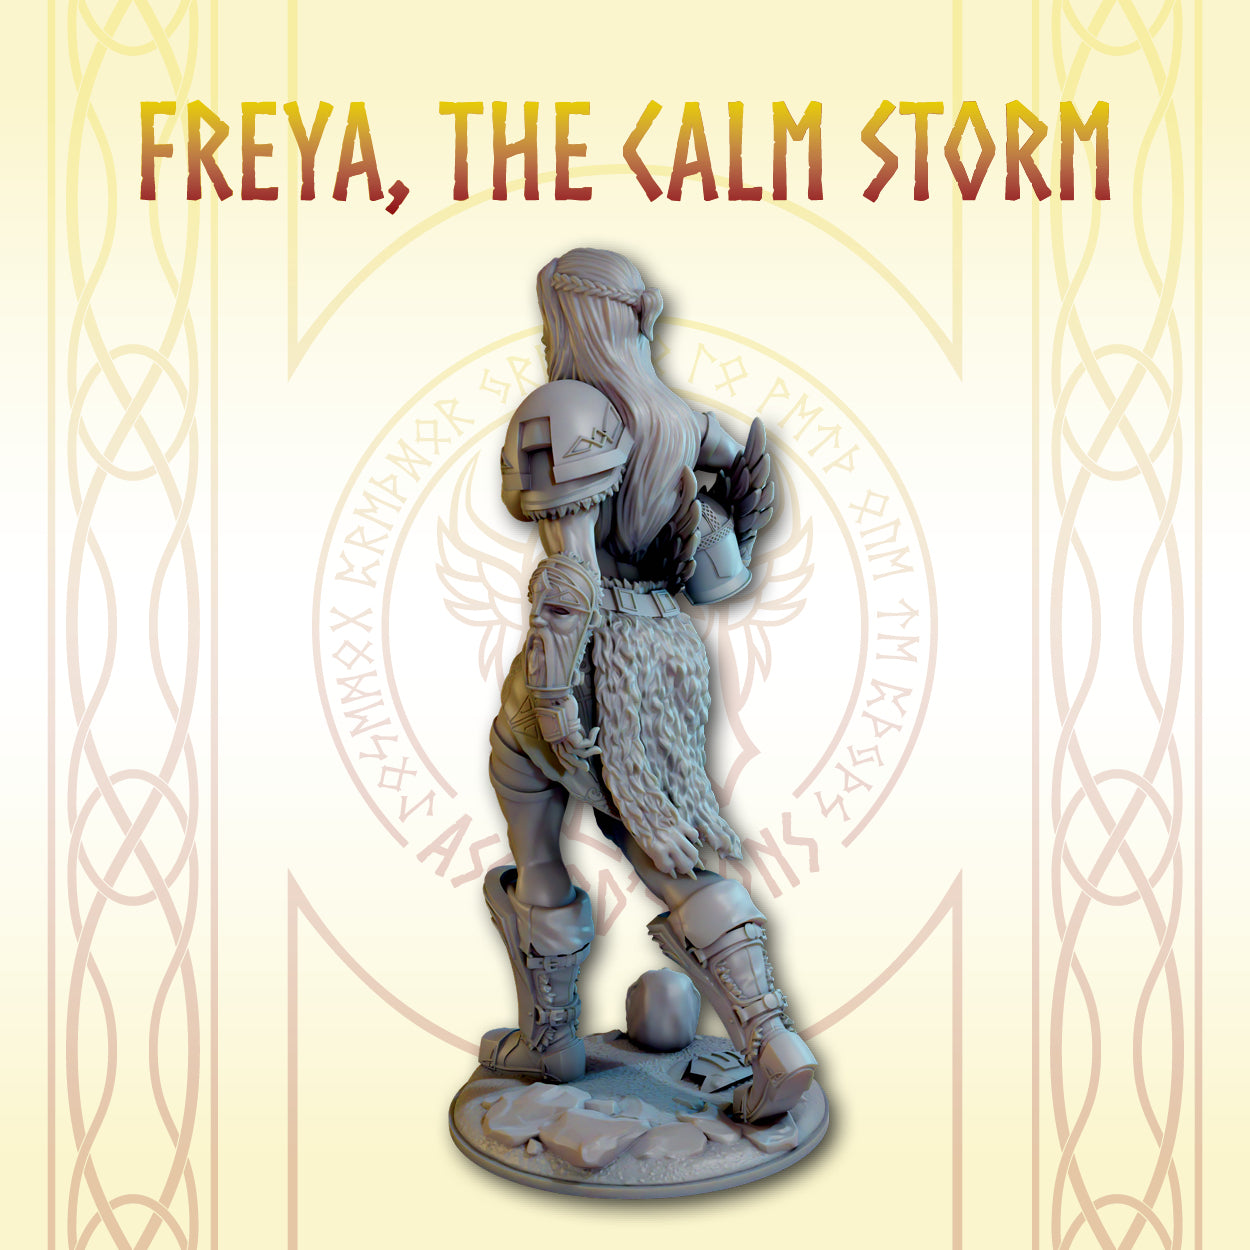 Freya, the calm storm